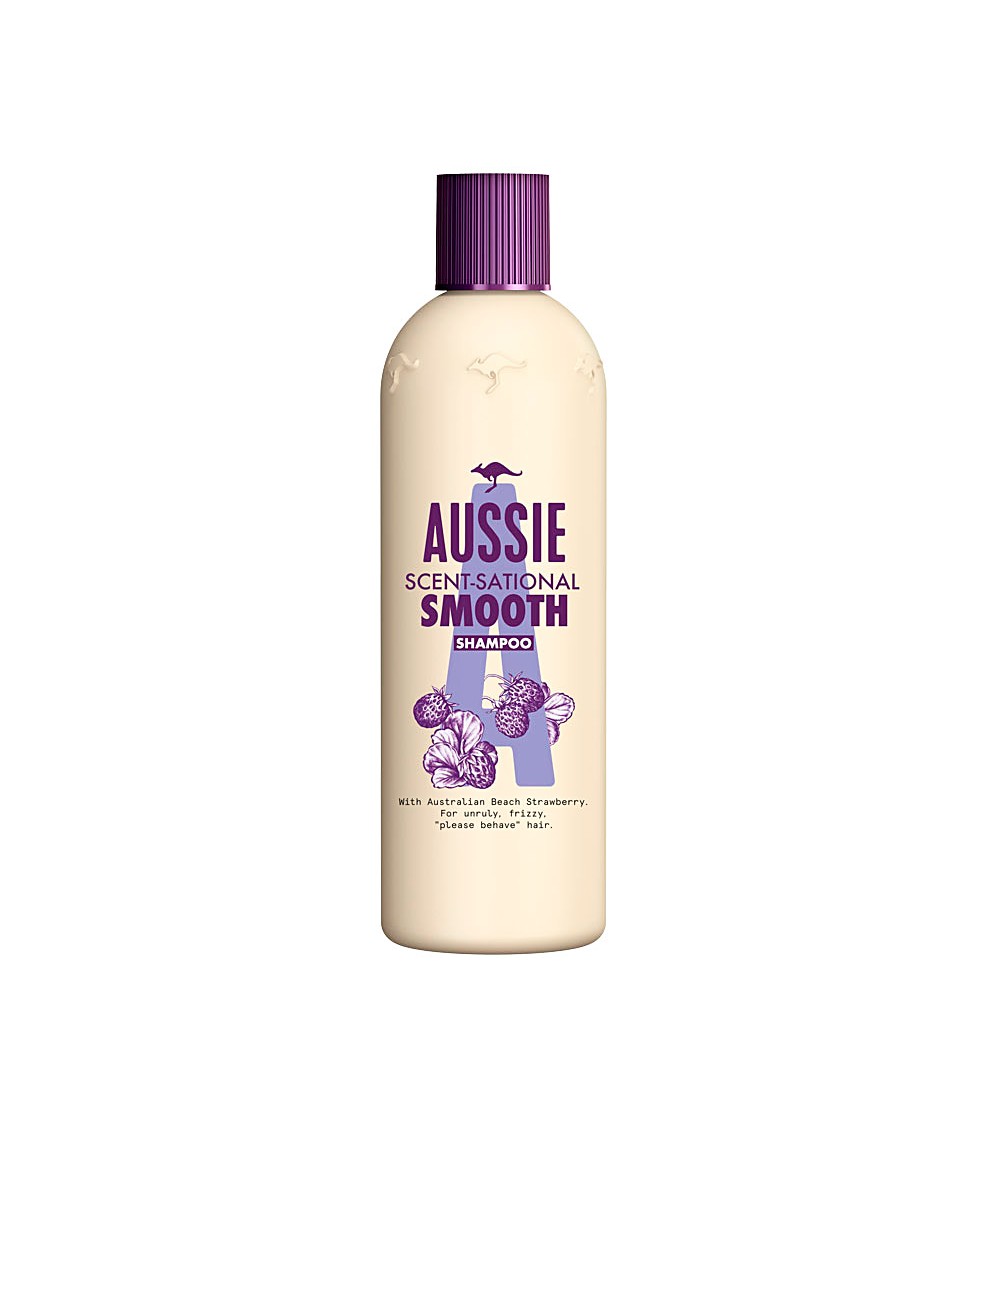 SCENT-SATIONAL SMOOTH shampoo 300 ml